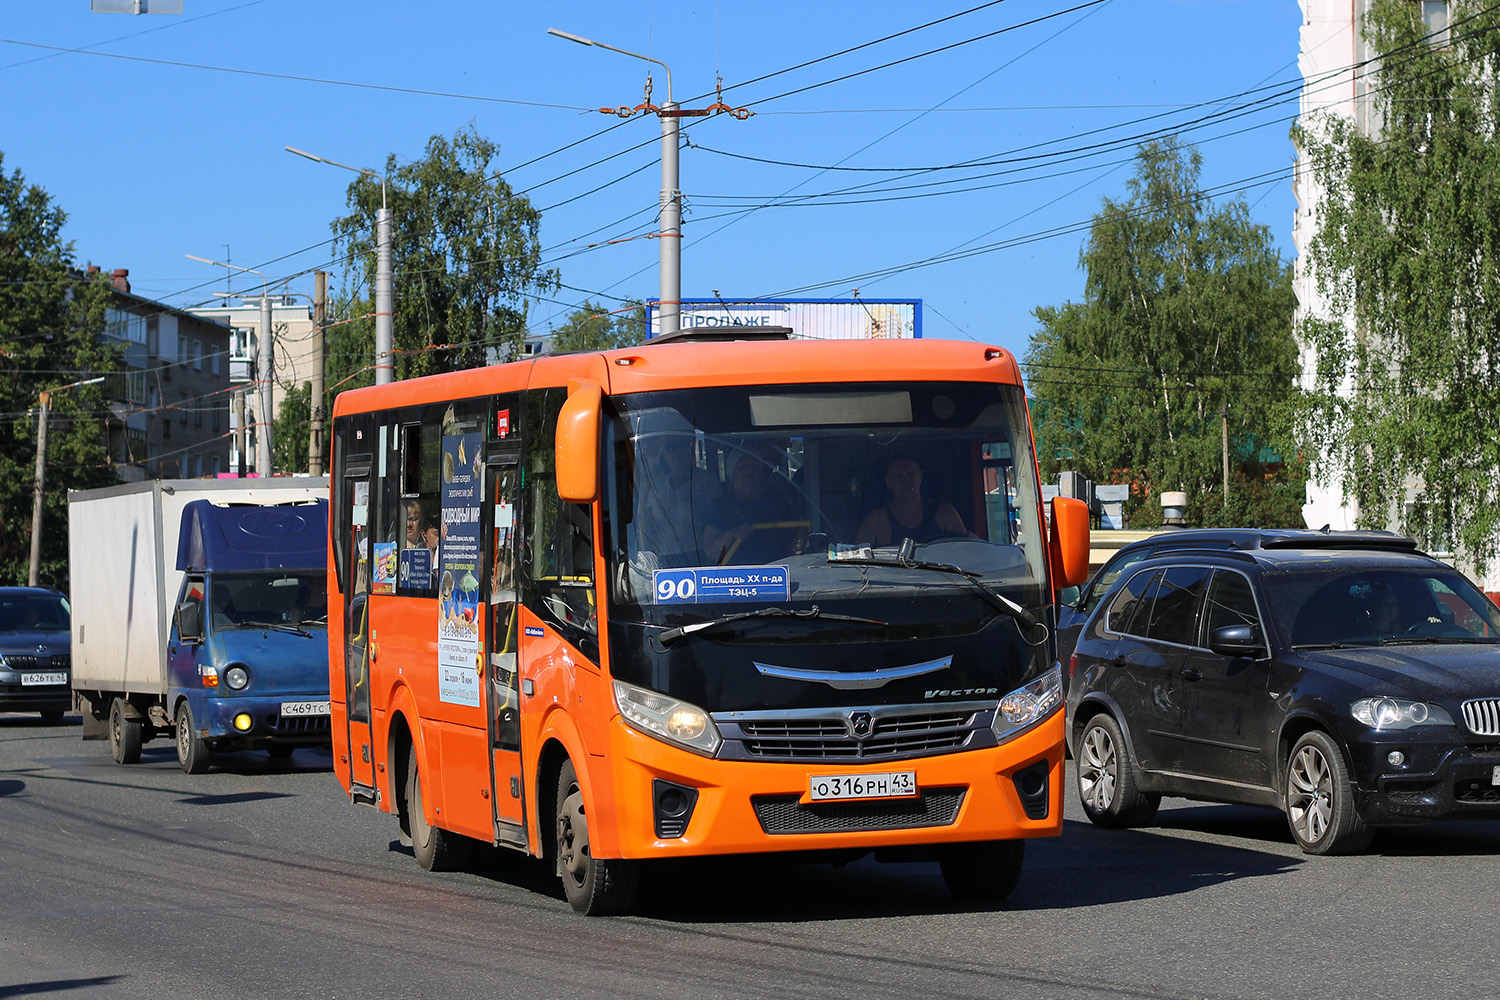 Kirov region, PAZ-320405-04 "Vector Next" # О 316 РН 43